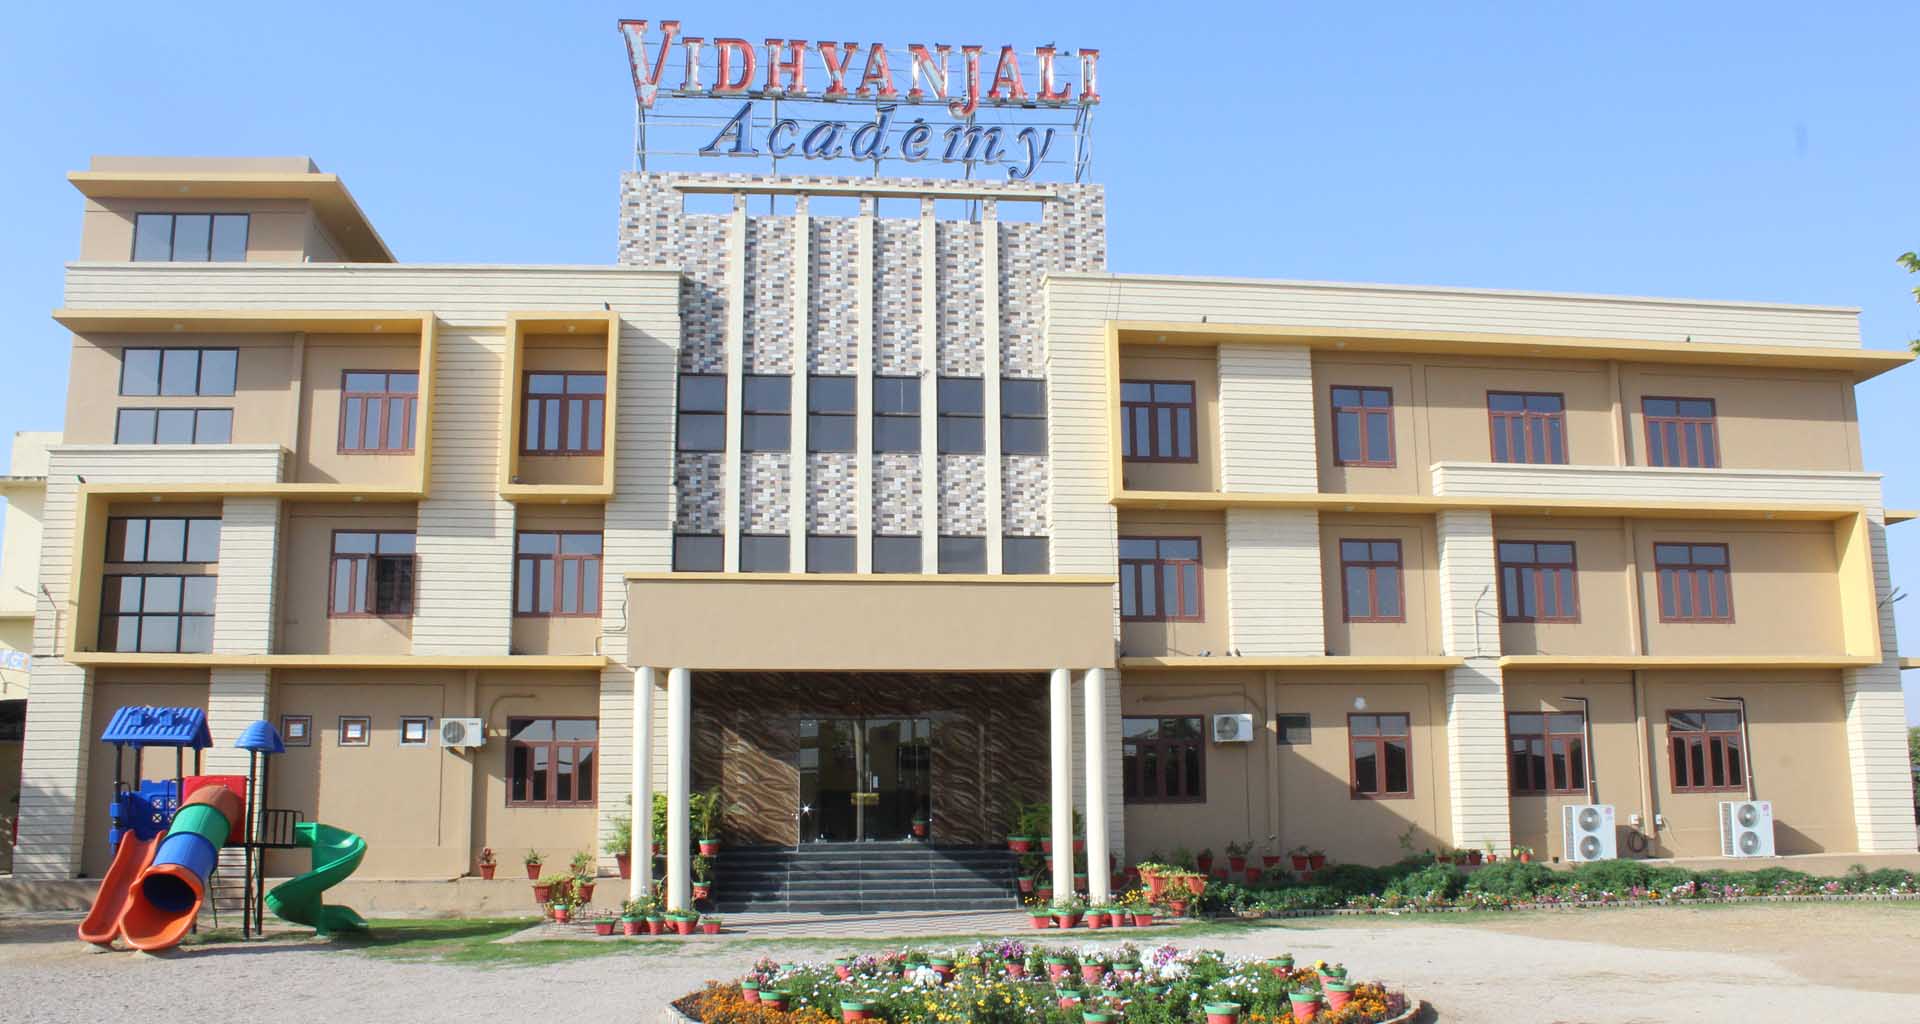 Vidhyanjali Academy